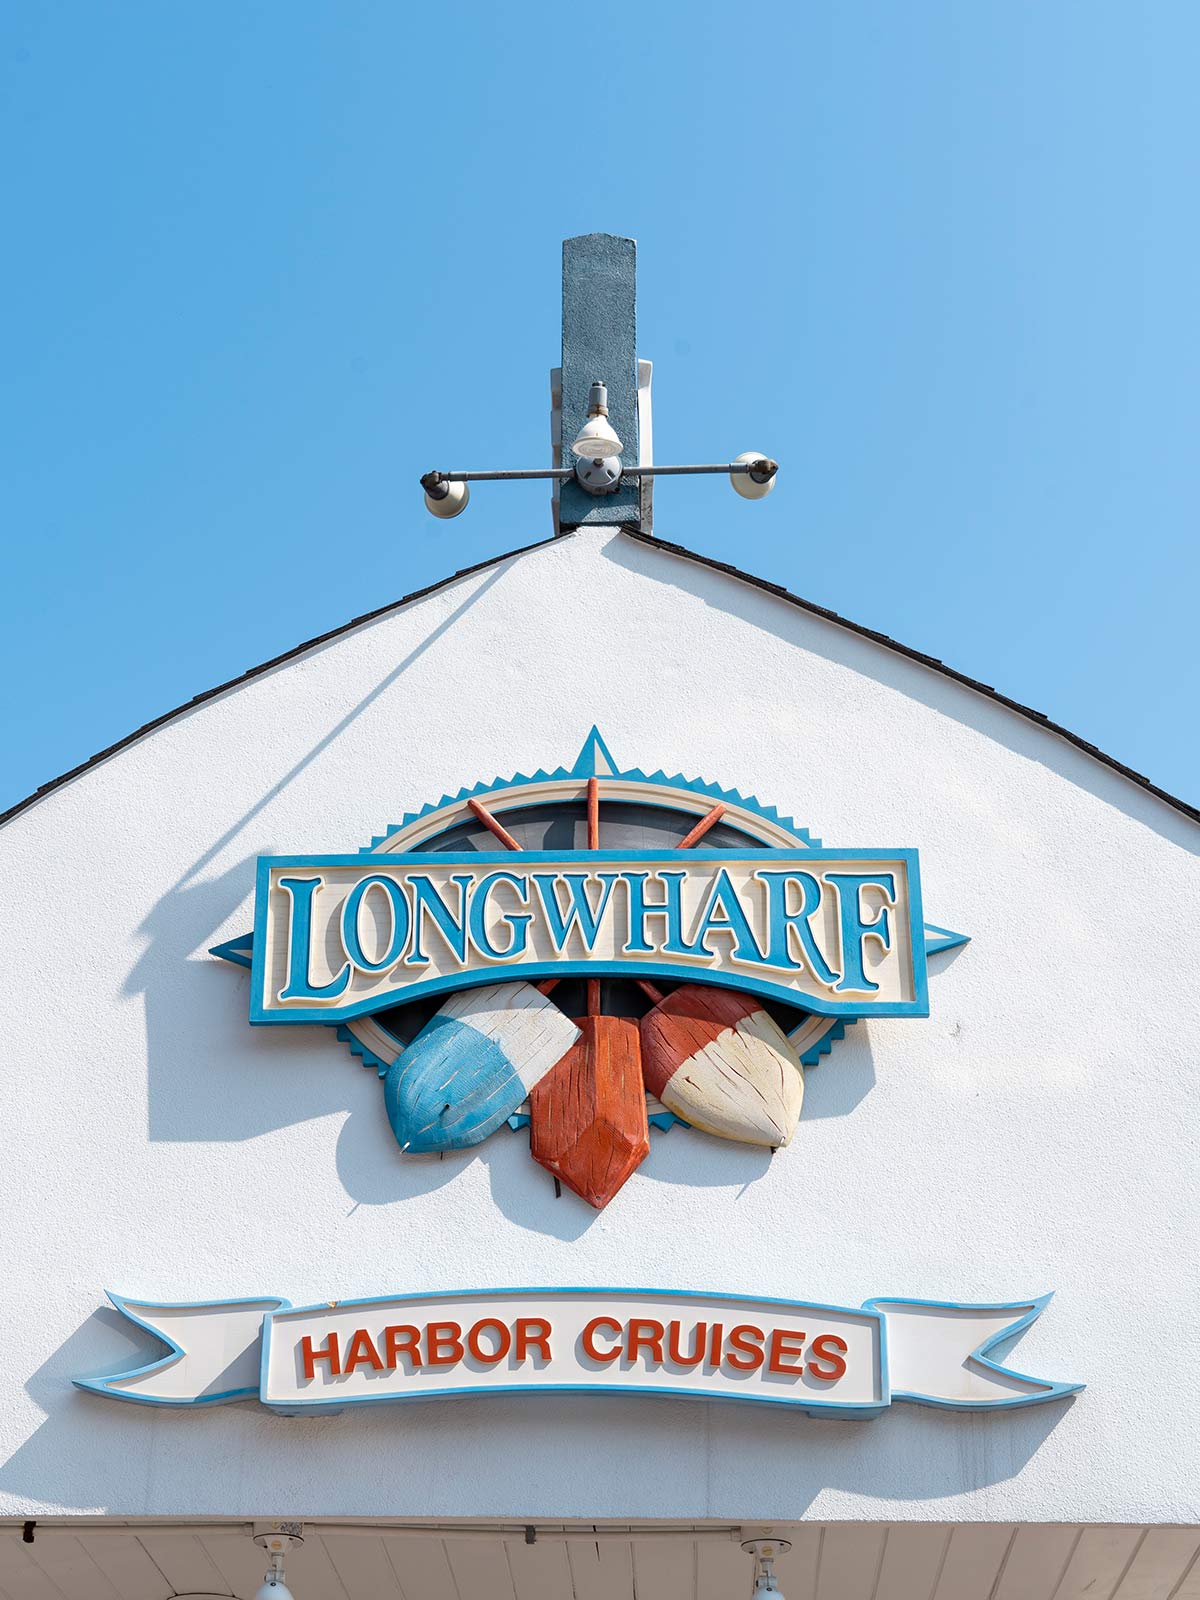 Excursion en bateau, Longwharf, Portland, Maine, États-Unis / Boat Tour, Harbor Cruises, Longwharf, Portland, Maine, USA